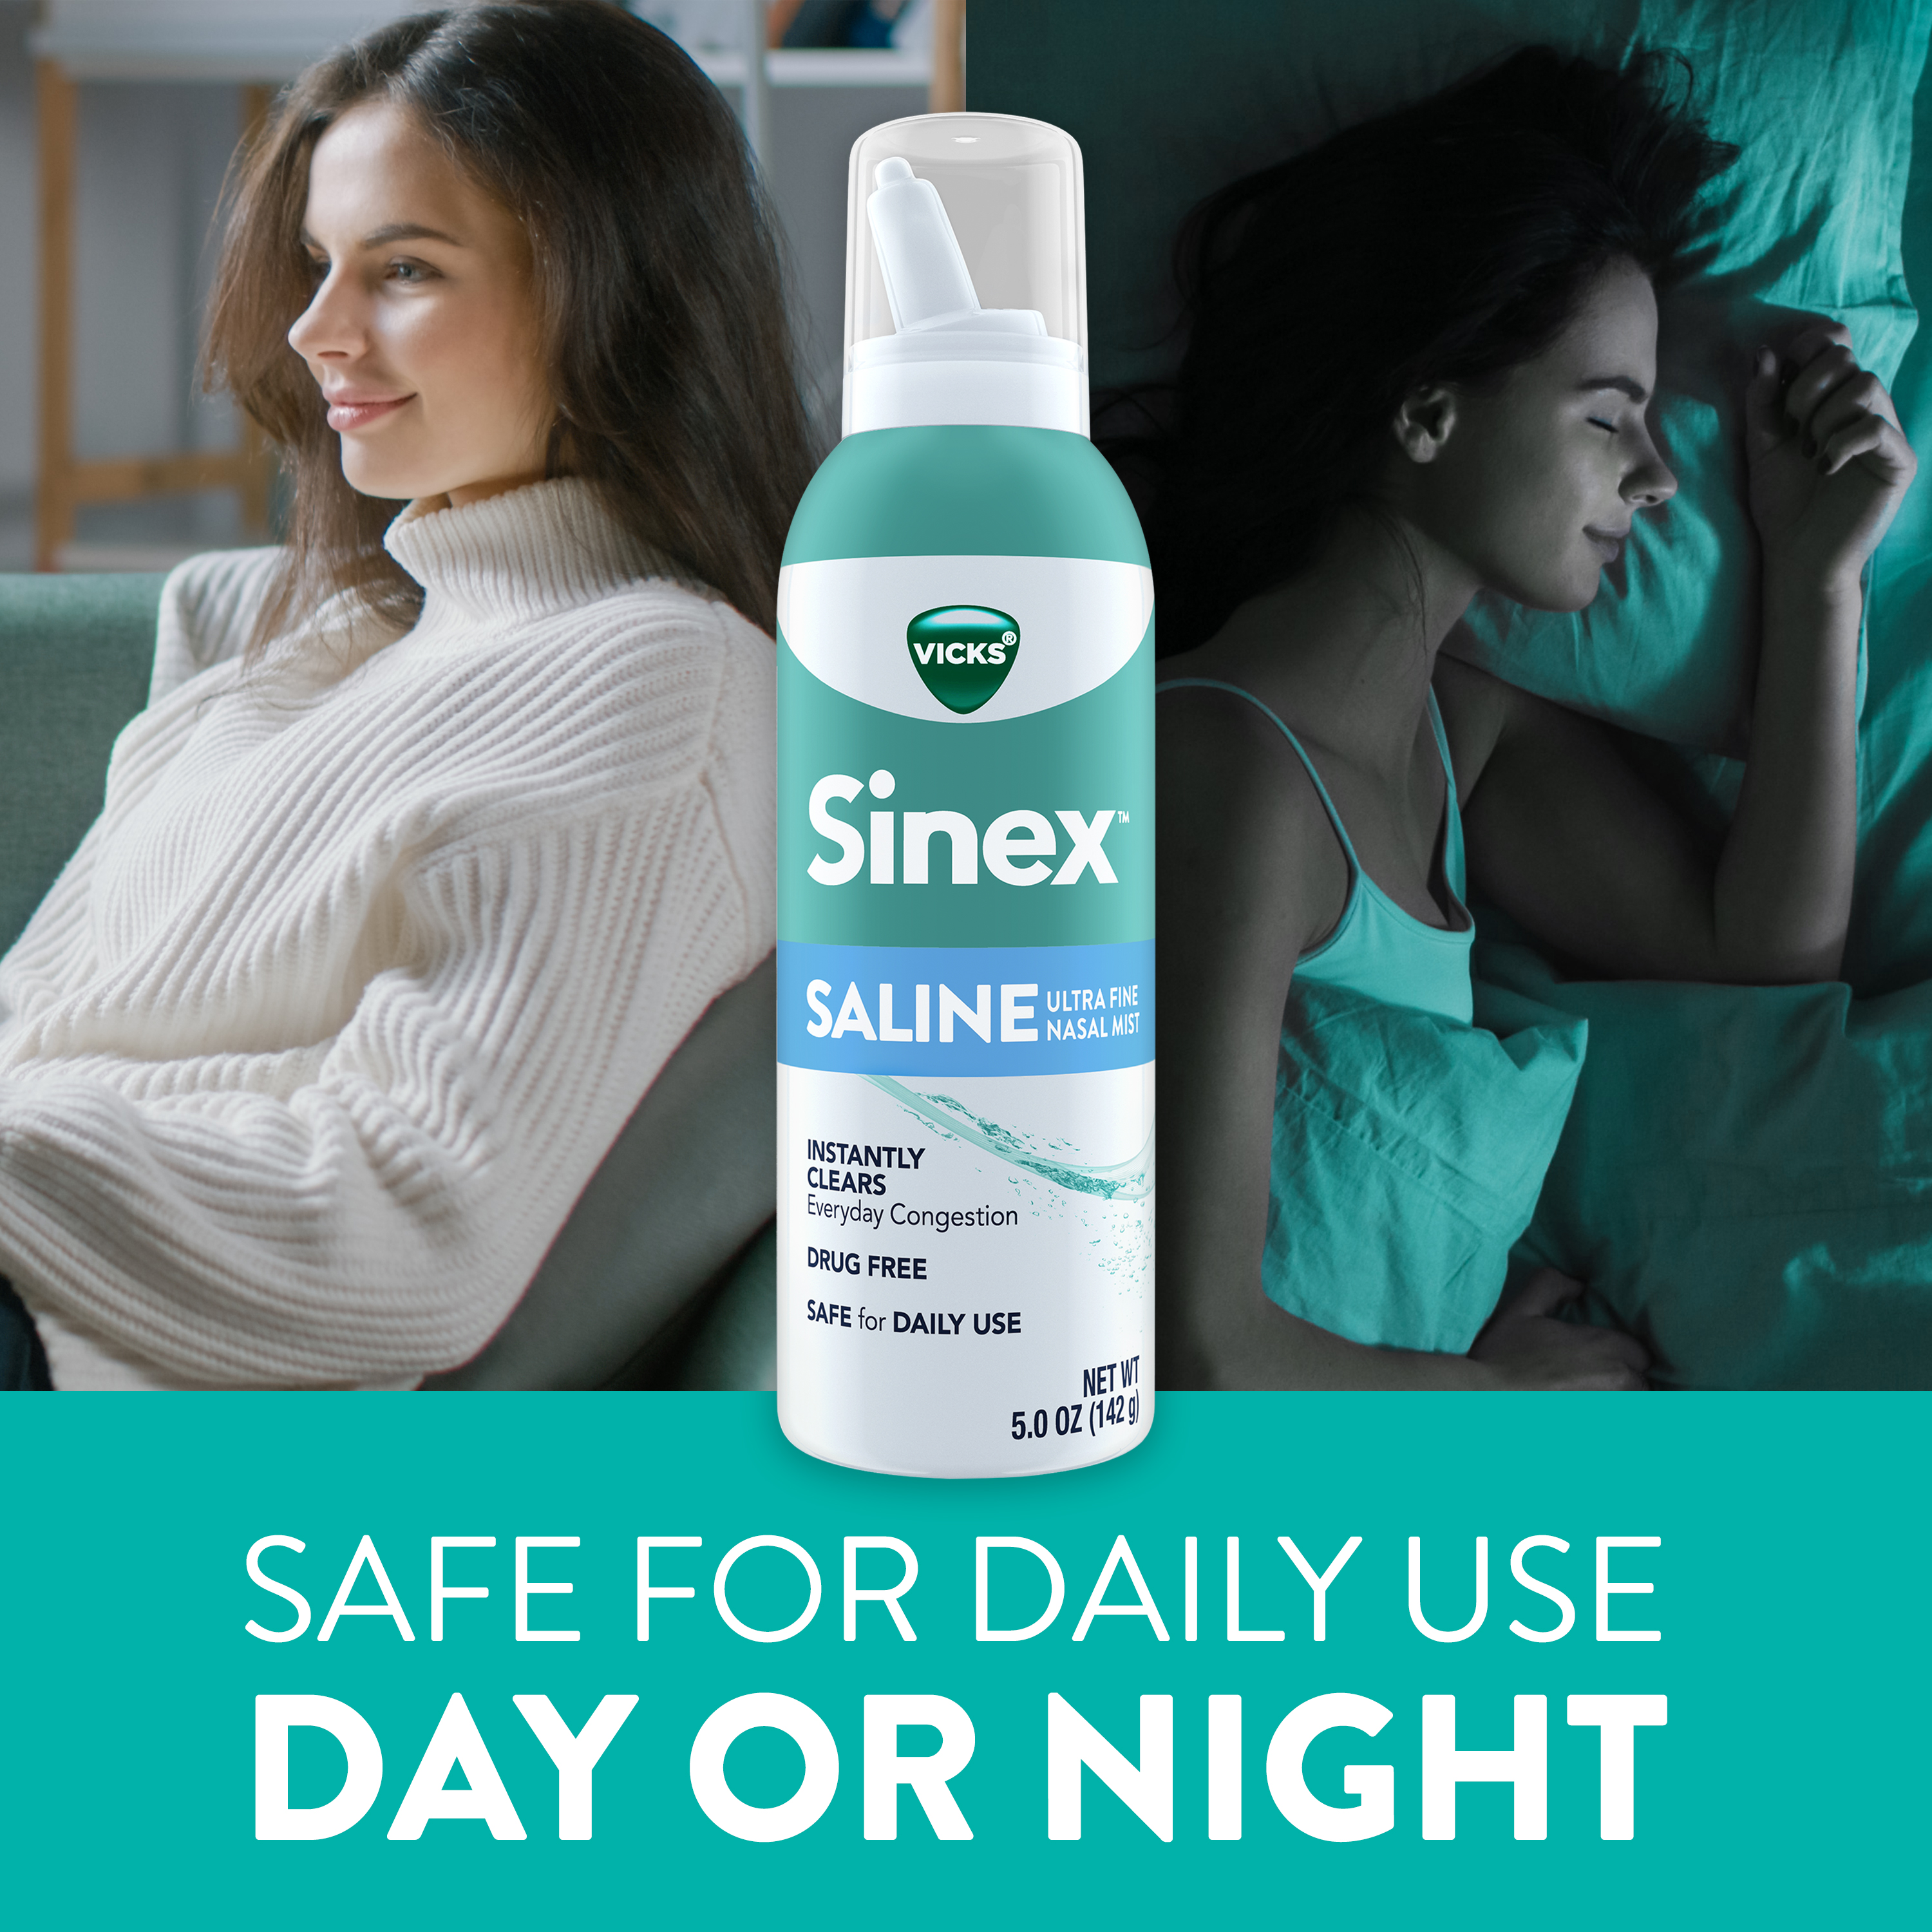 Vicks Sinex Saline Ultra Fine Nasal Mist Spray for Sinus Relief, Drug Free, 5 oz Unisex - image 4 of 11